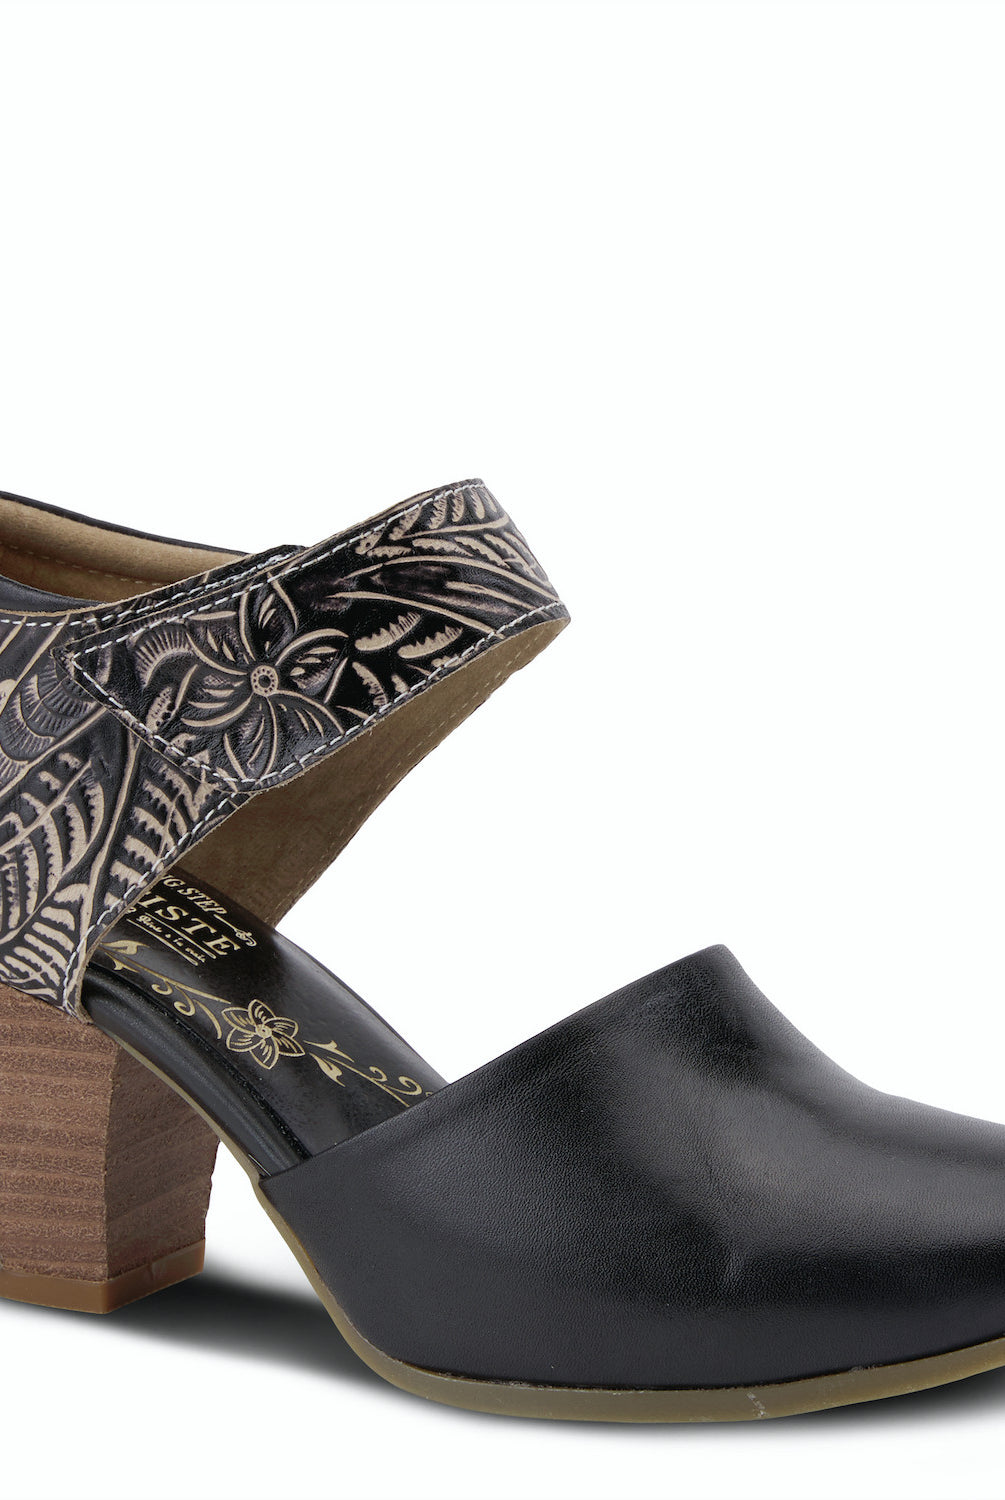 Toolie in Black-heels-UrbanCulture-Boutique, A North Port, Florida Women's Fashion Boutique